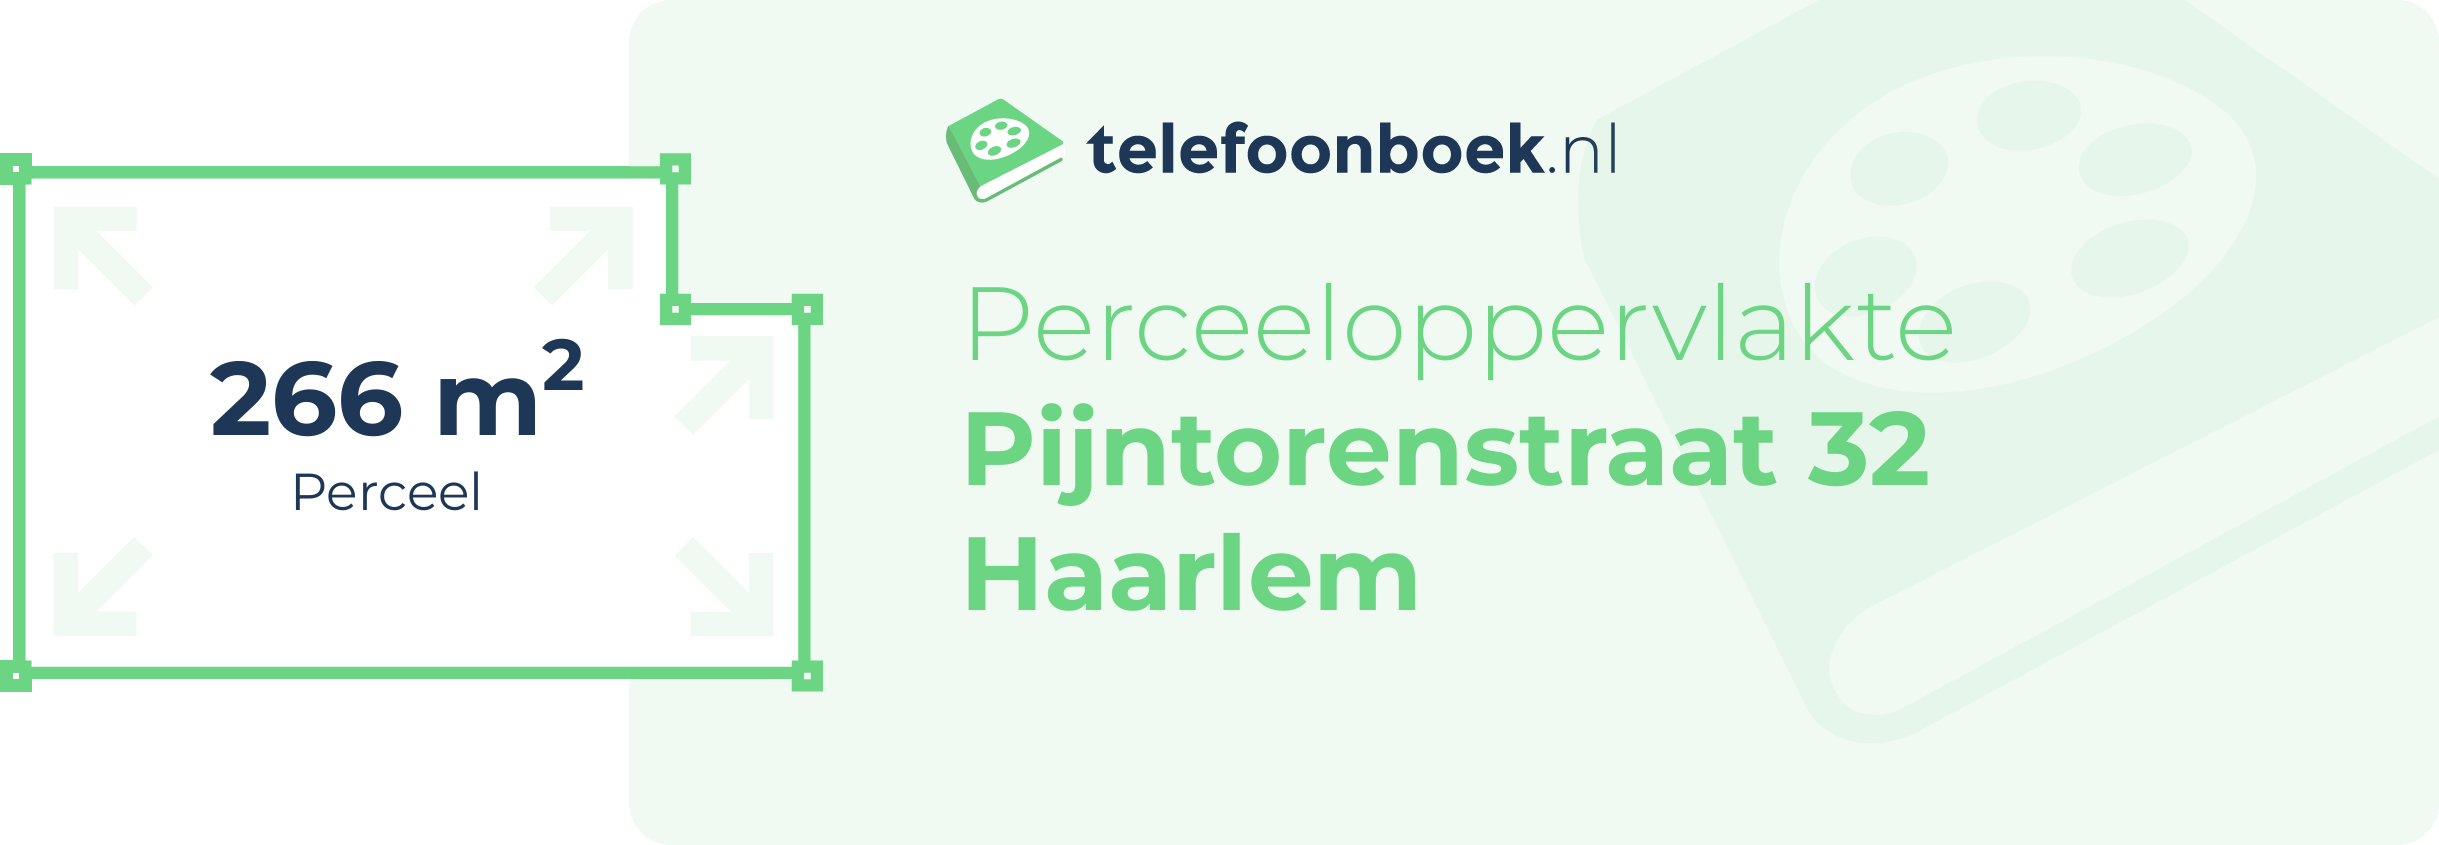 Perceeloppervlakte Pijntorenstraat 32 Haarlem